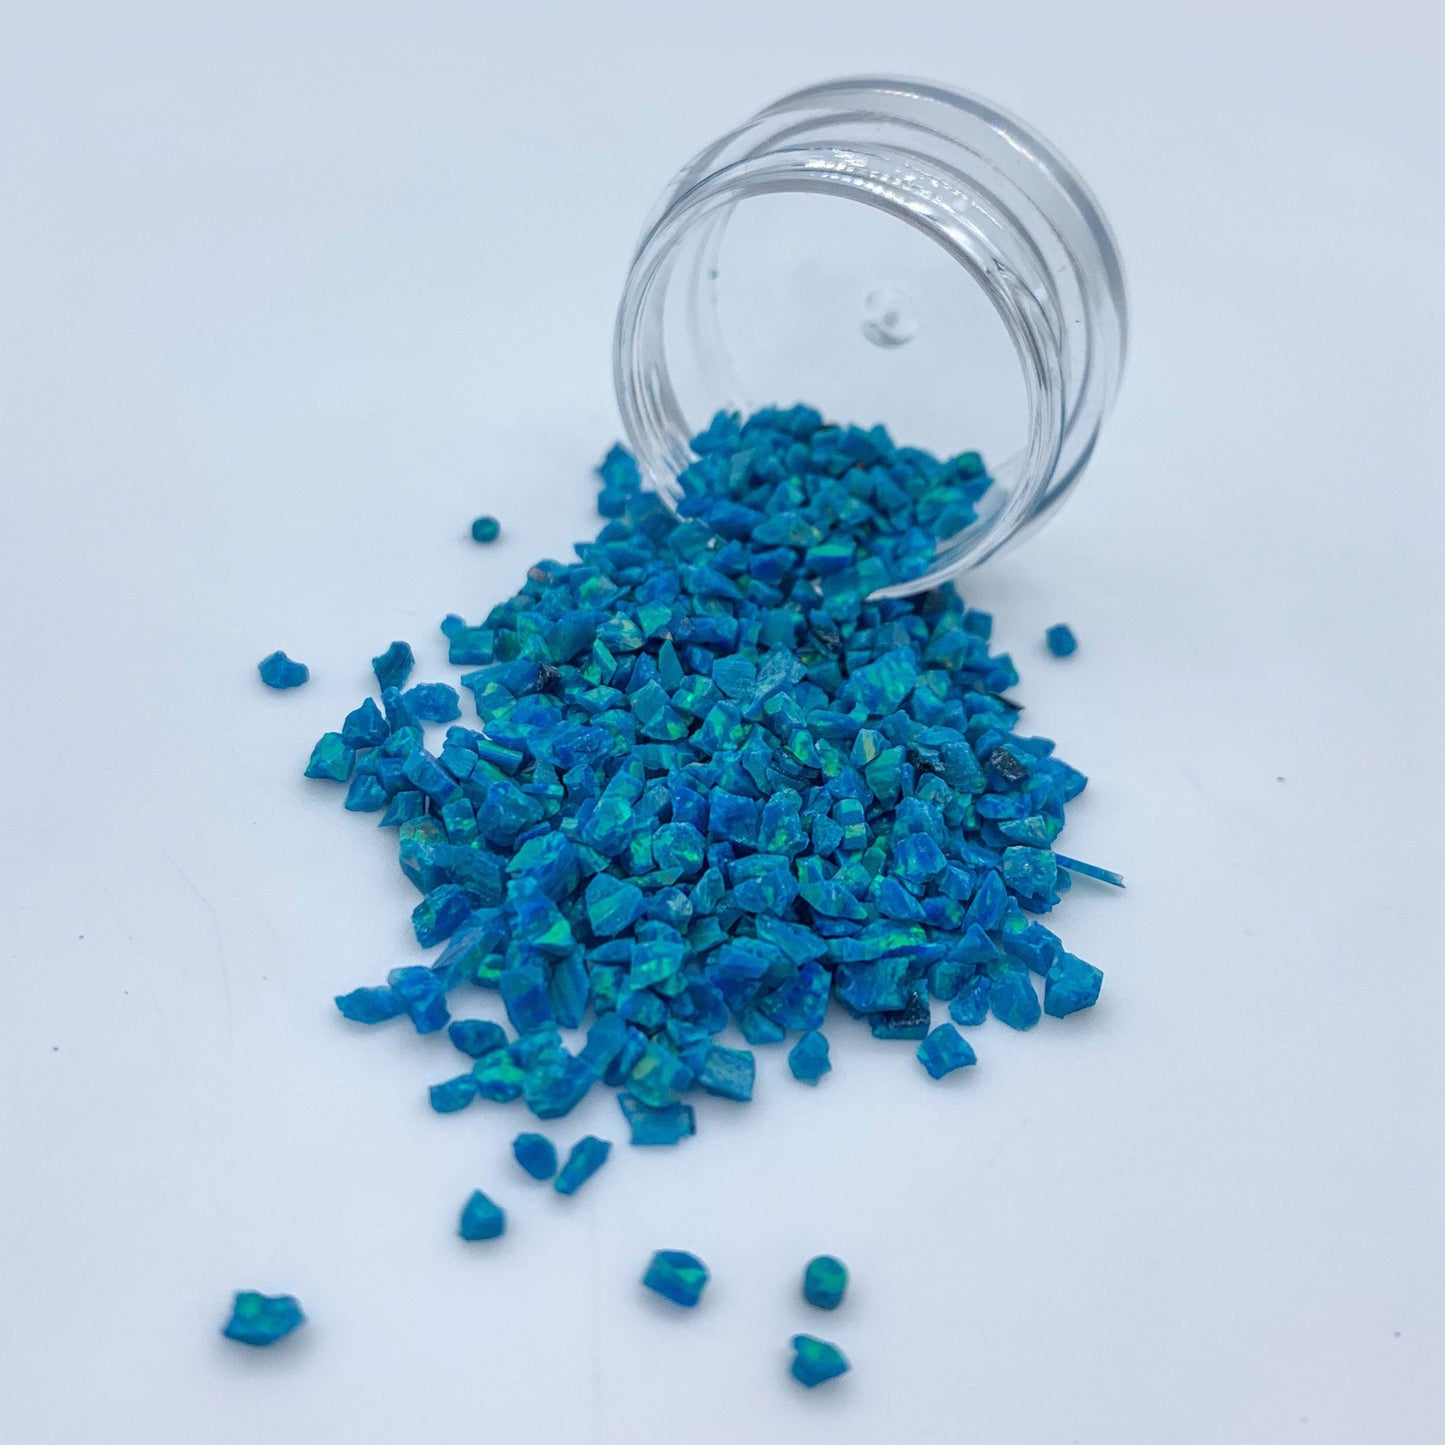 Opal - Teal Blue - Patrick Adair Supplies